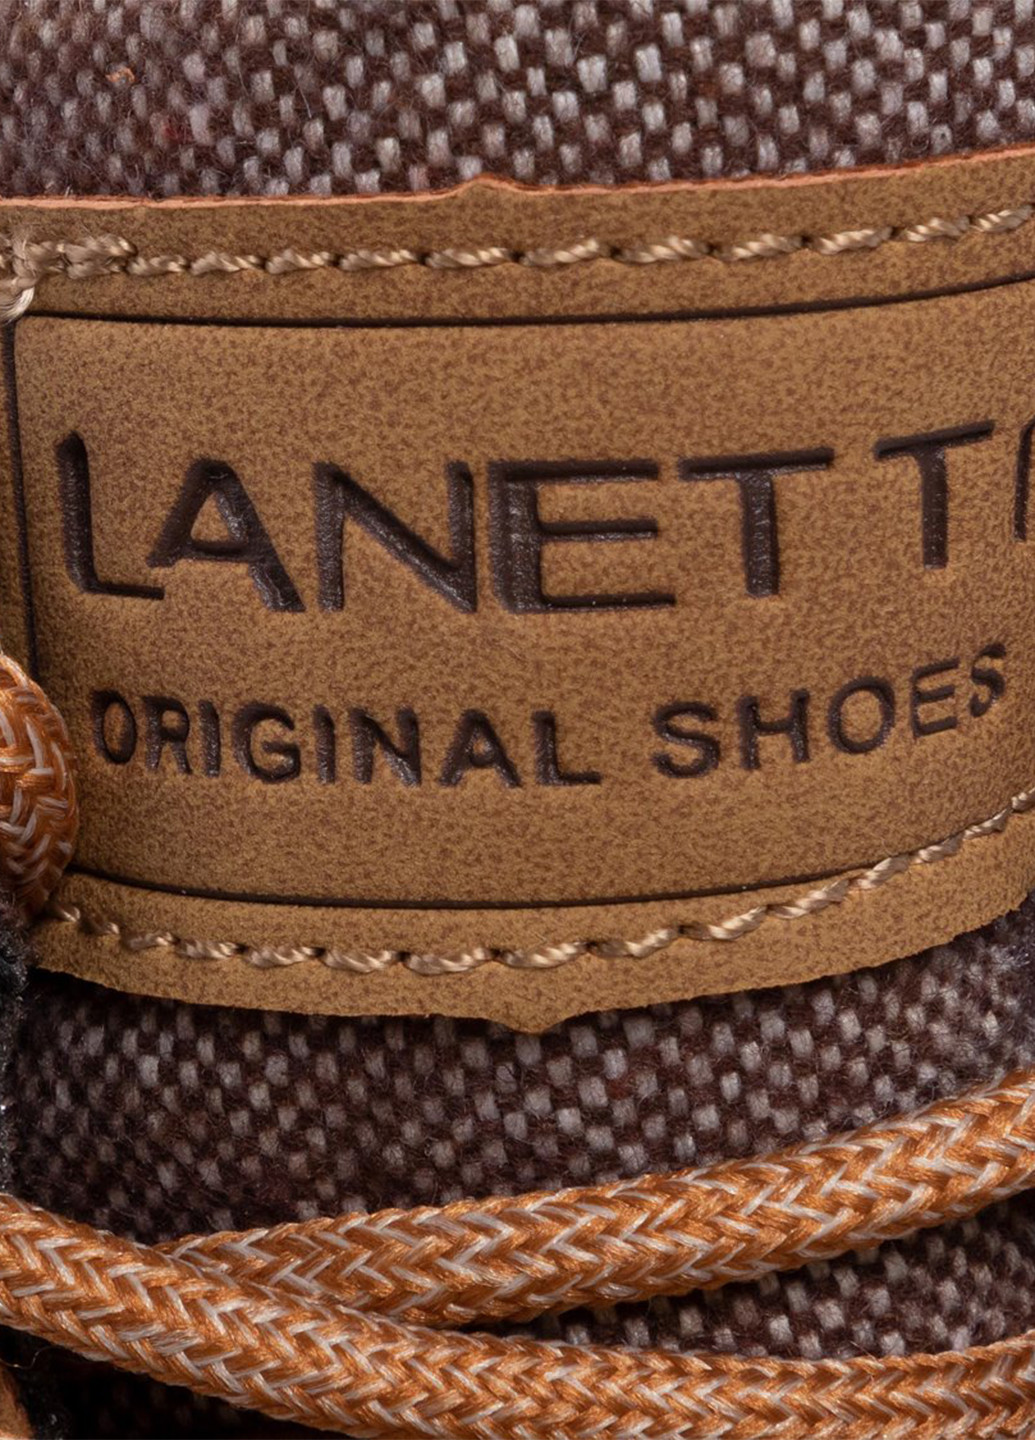 Бежевые осенние черевики Lanetti